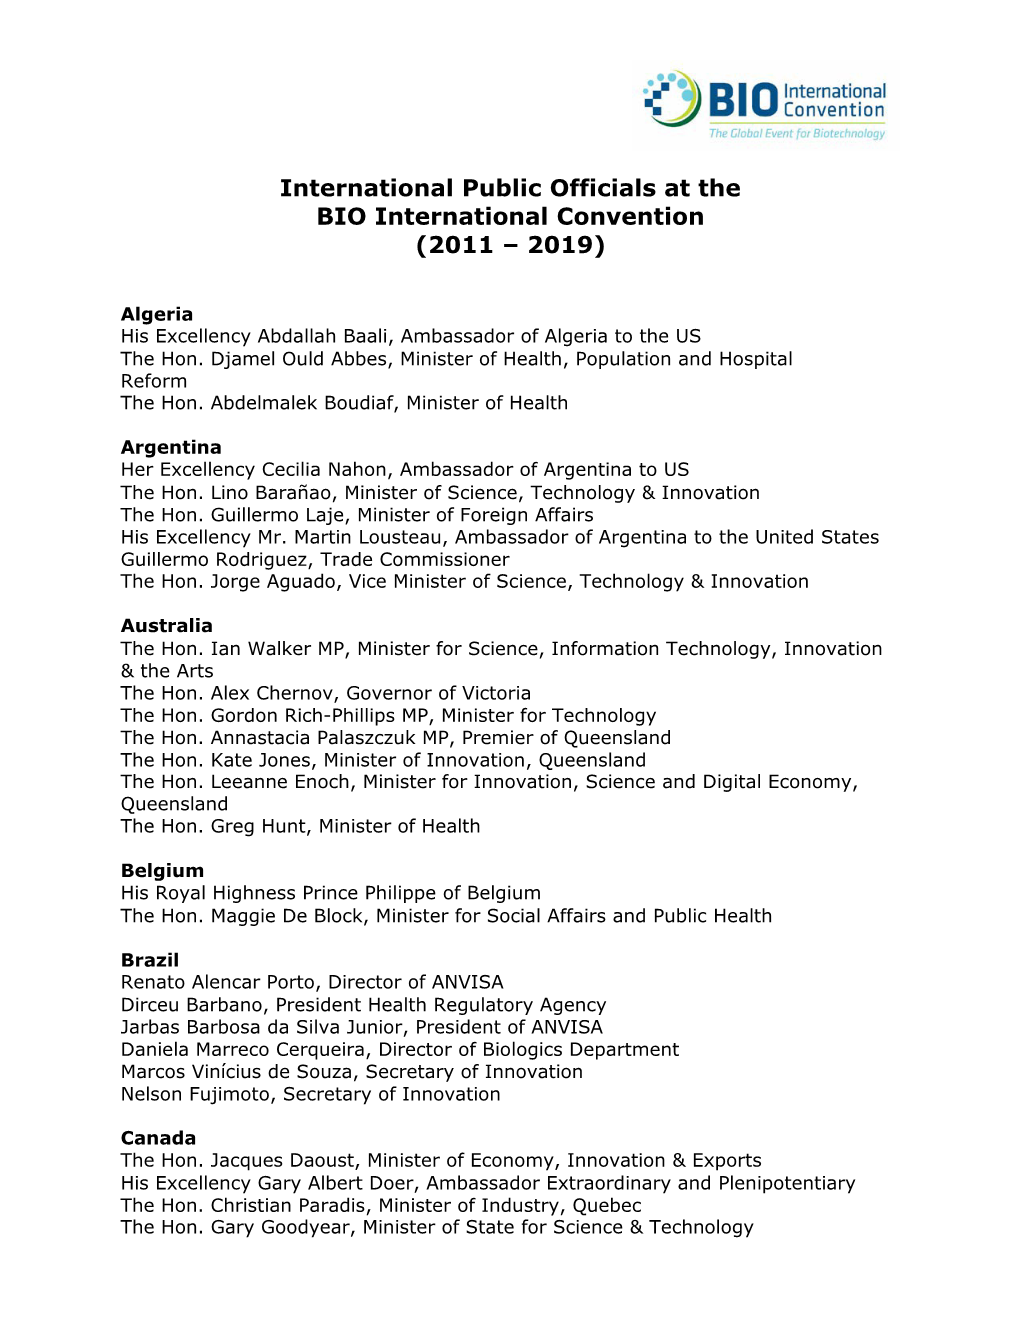 International Public Officials at the BIO International Convention (2011 – 2019)